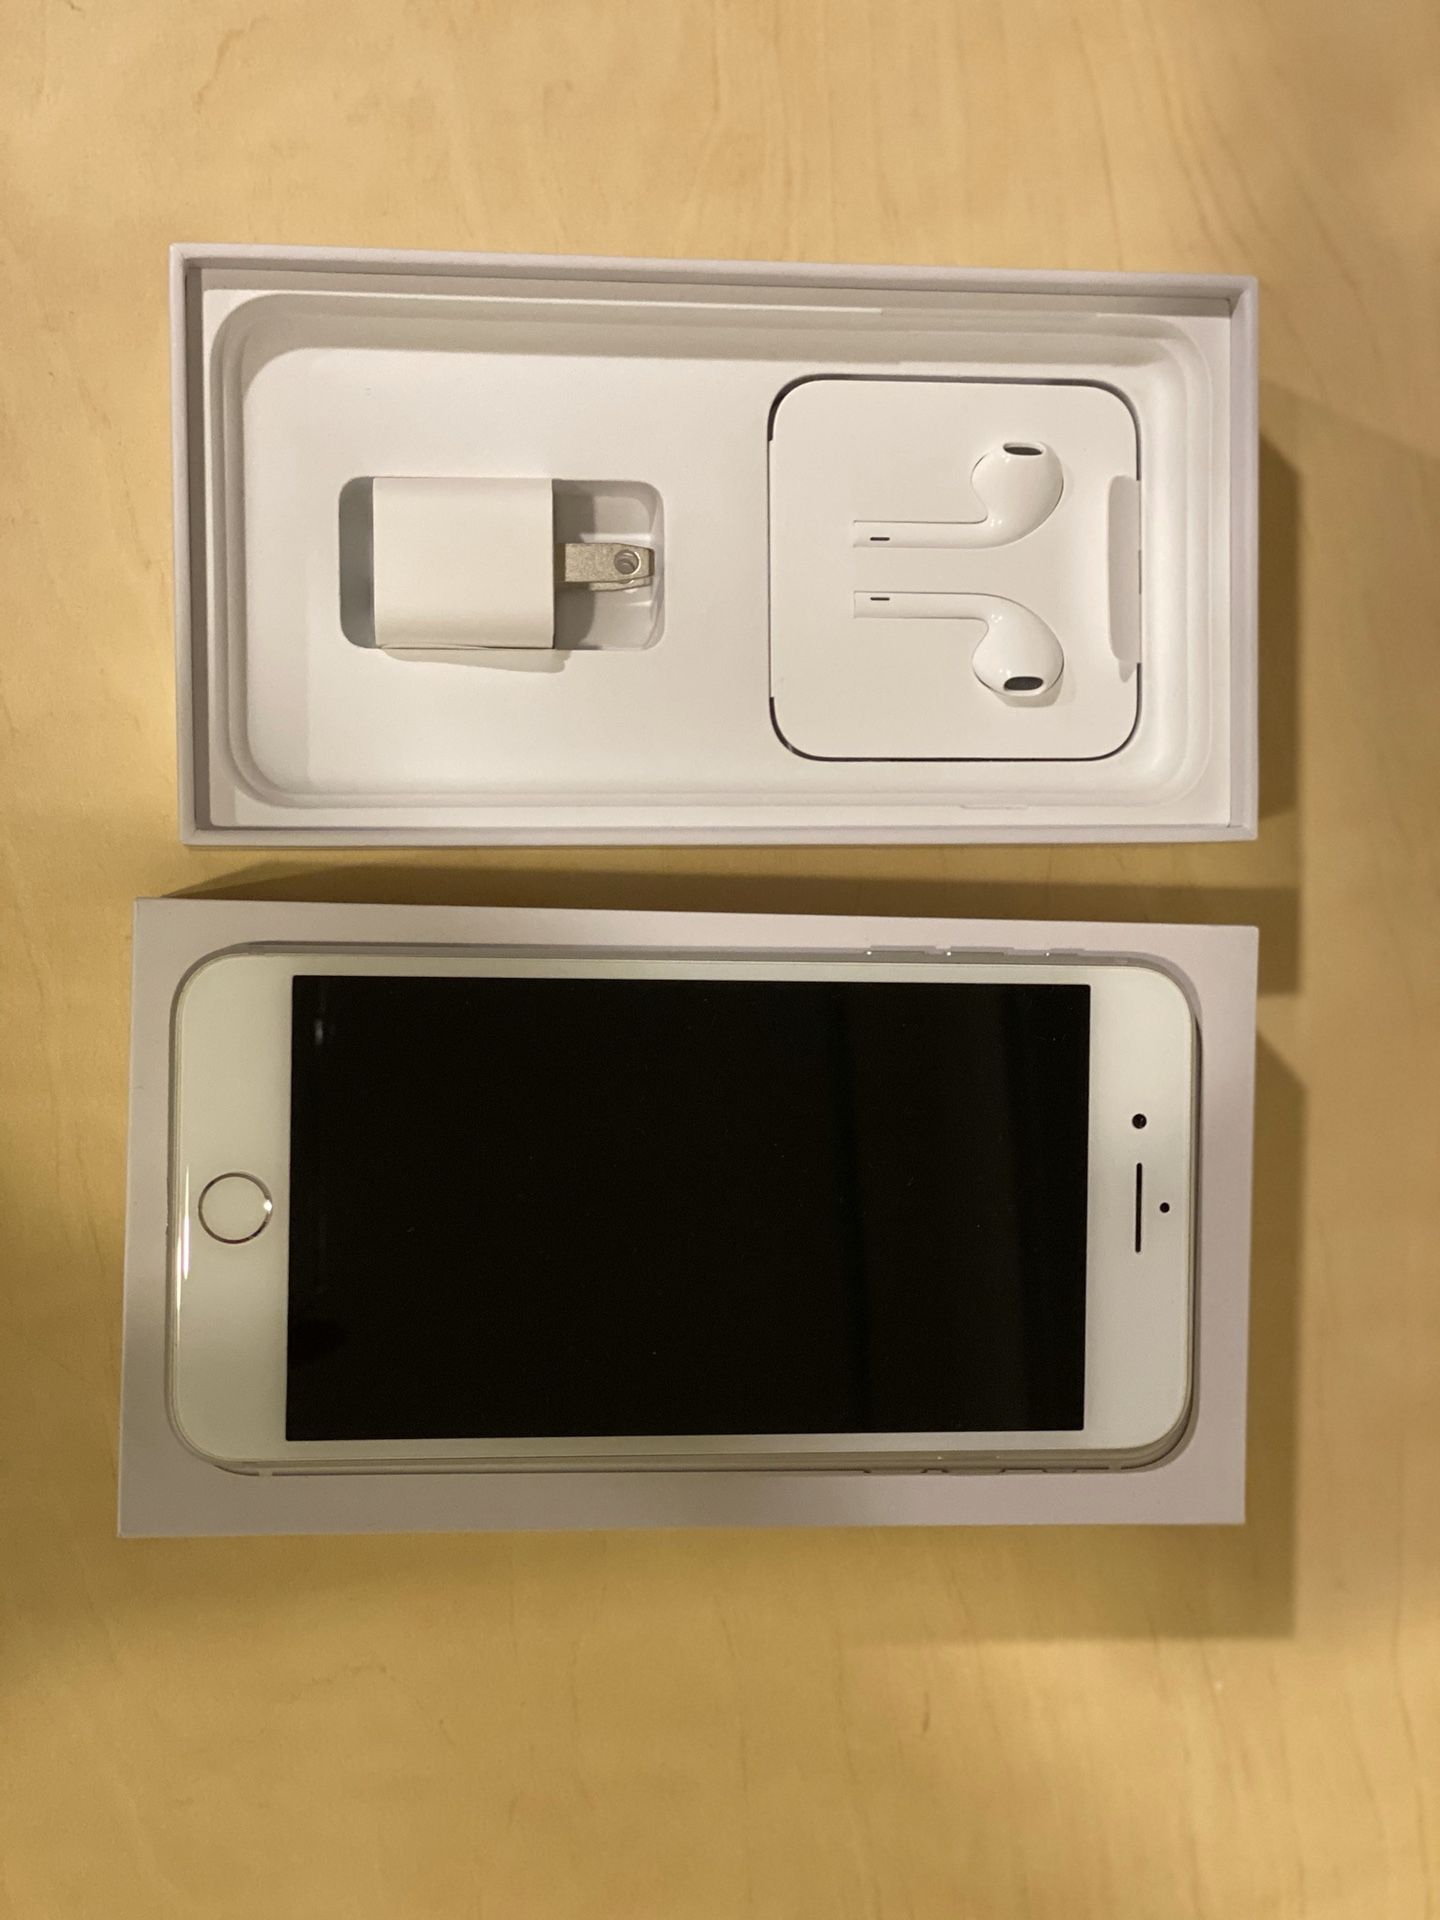 iPhone 8 Plus 256GB Silver factory unlocked